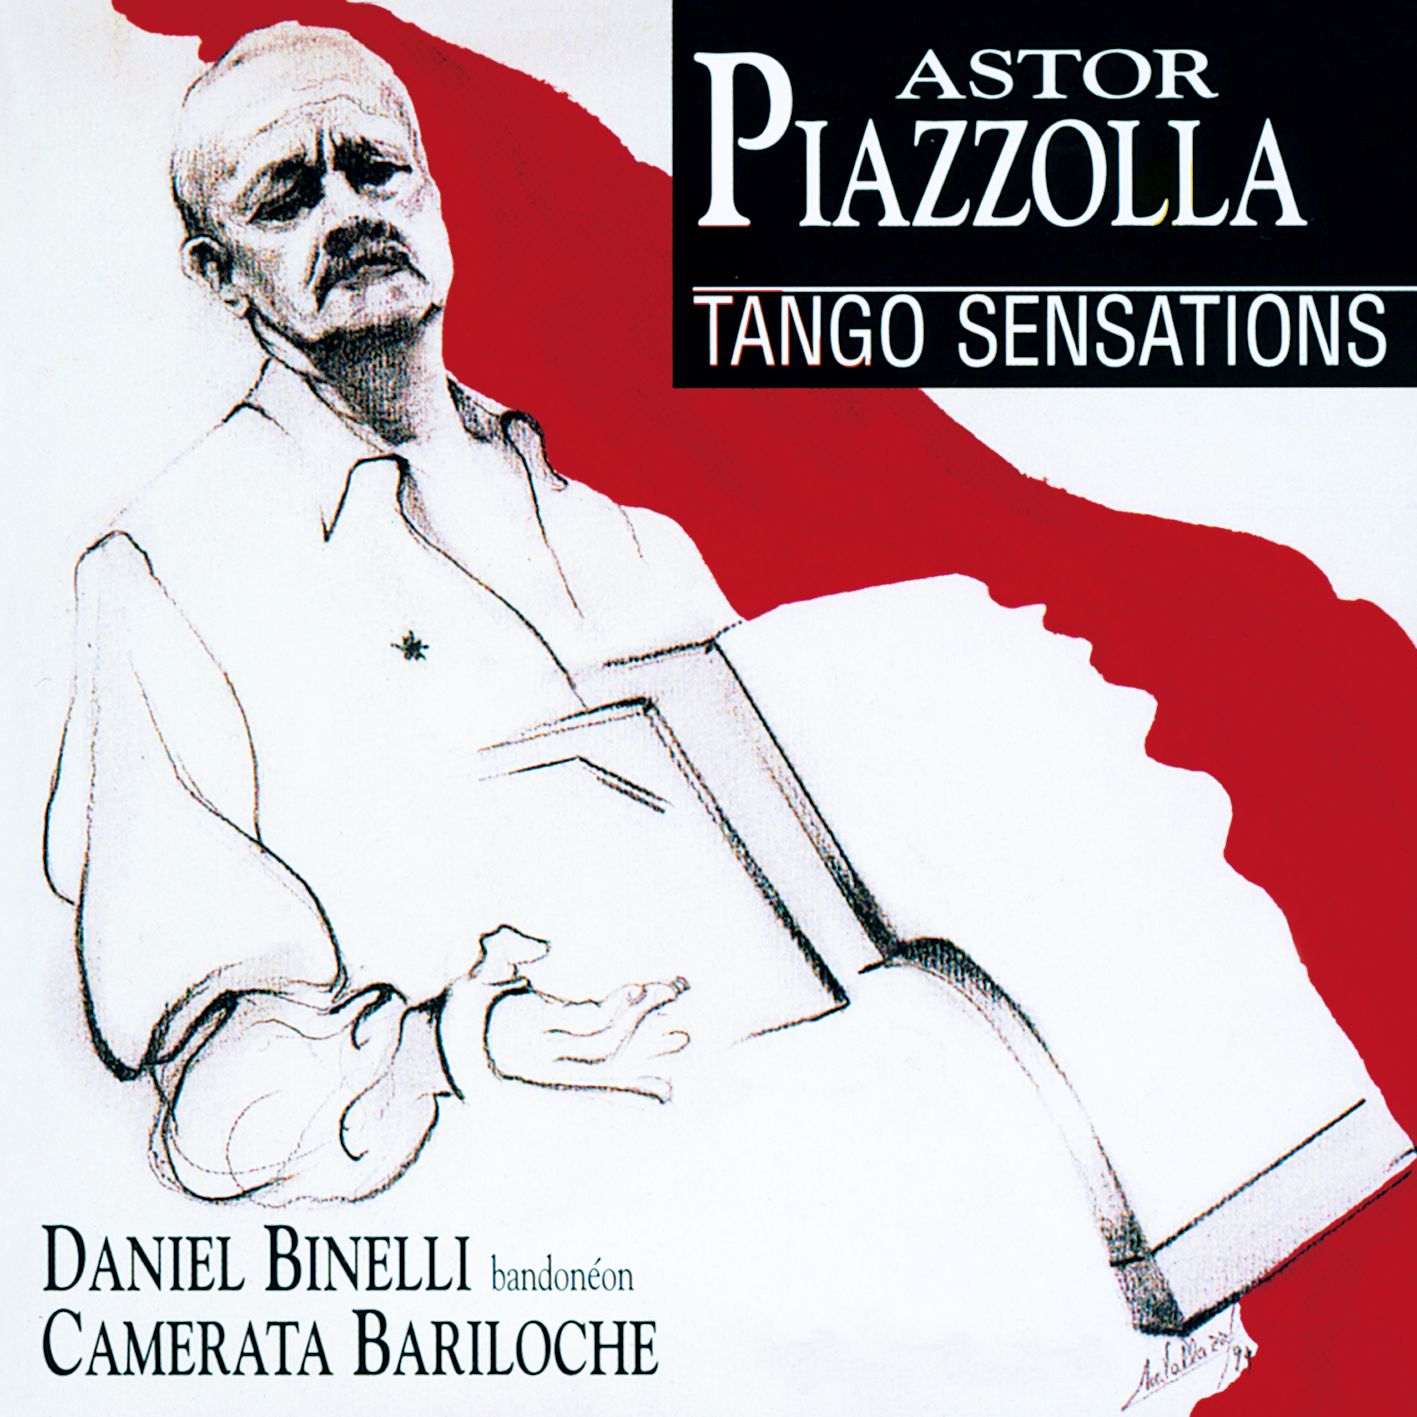 Tango Sensations